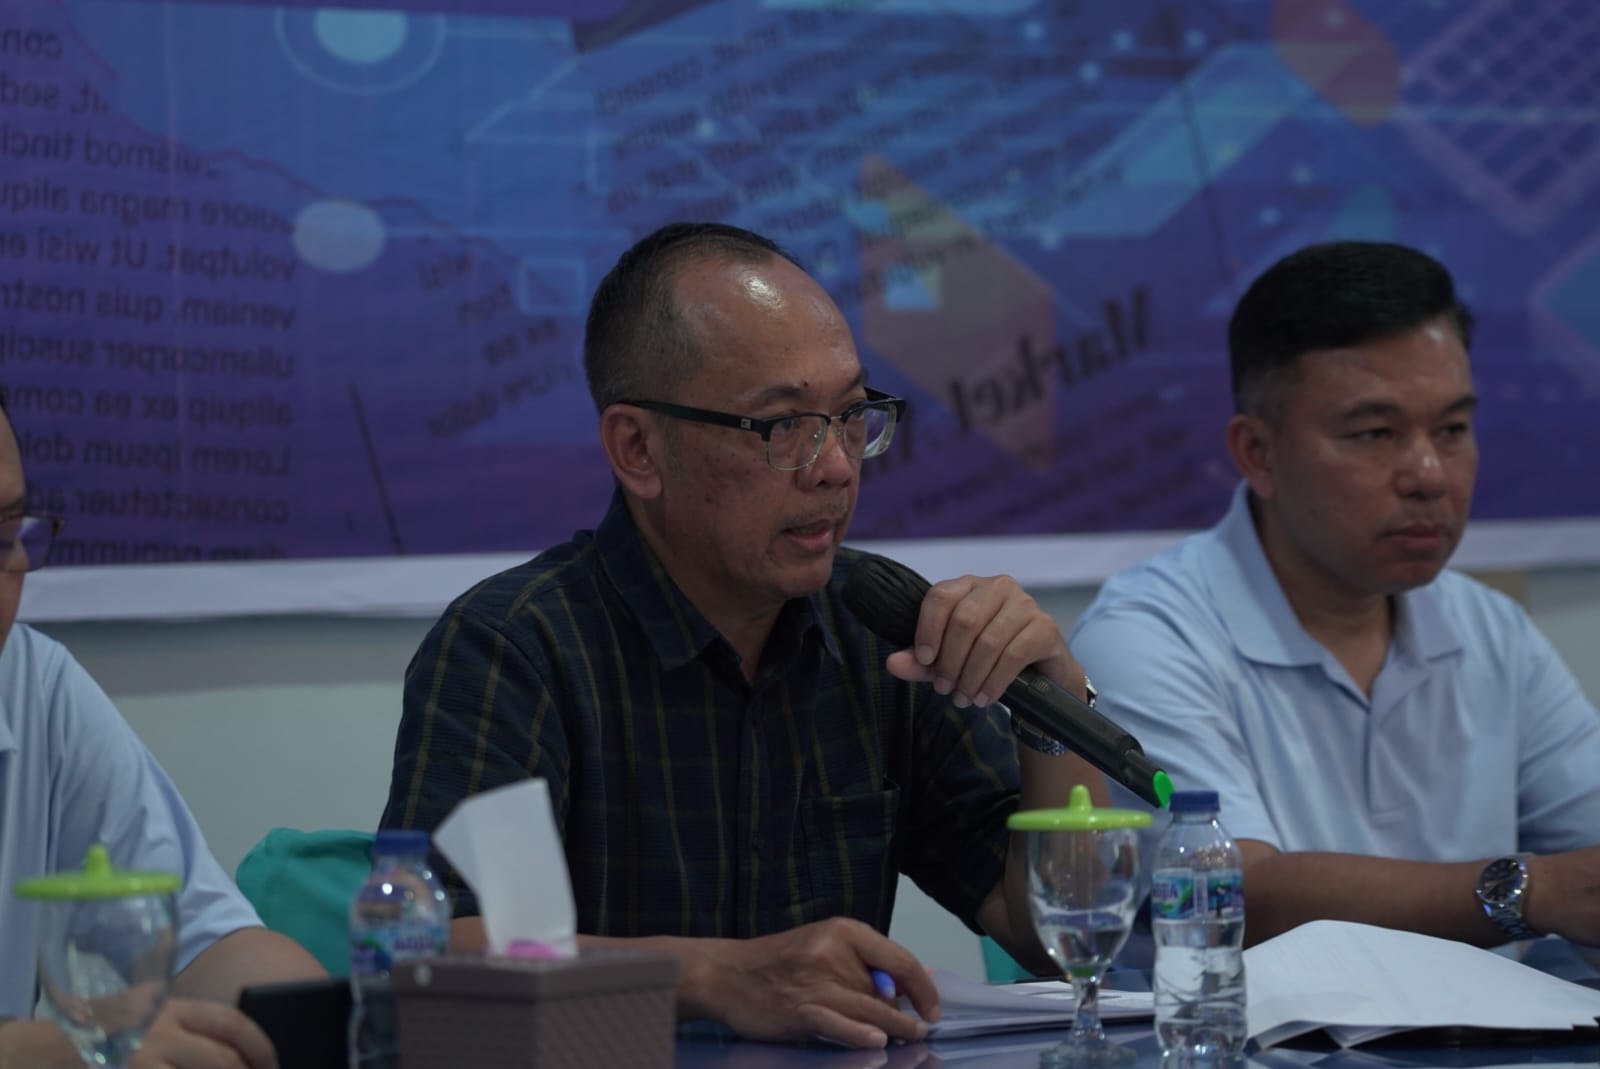 Deputi Kepala Kantor Perwakilan Bank Indonesia Sumatera Utara, Ibrahim dalam acara Bincang Bareng Media (BBM) Sumatera Utara yang dirangkai dengan kegiatan Pelatihan Wartawan yang digelar di Kota Sabang, Aceh, Sabtu (24/6).